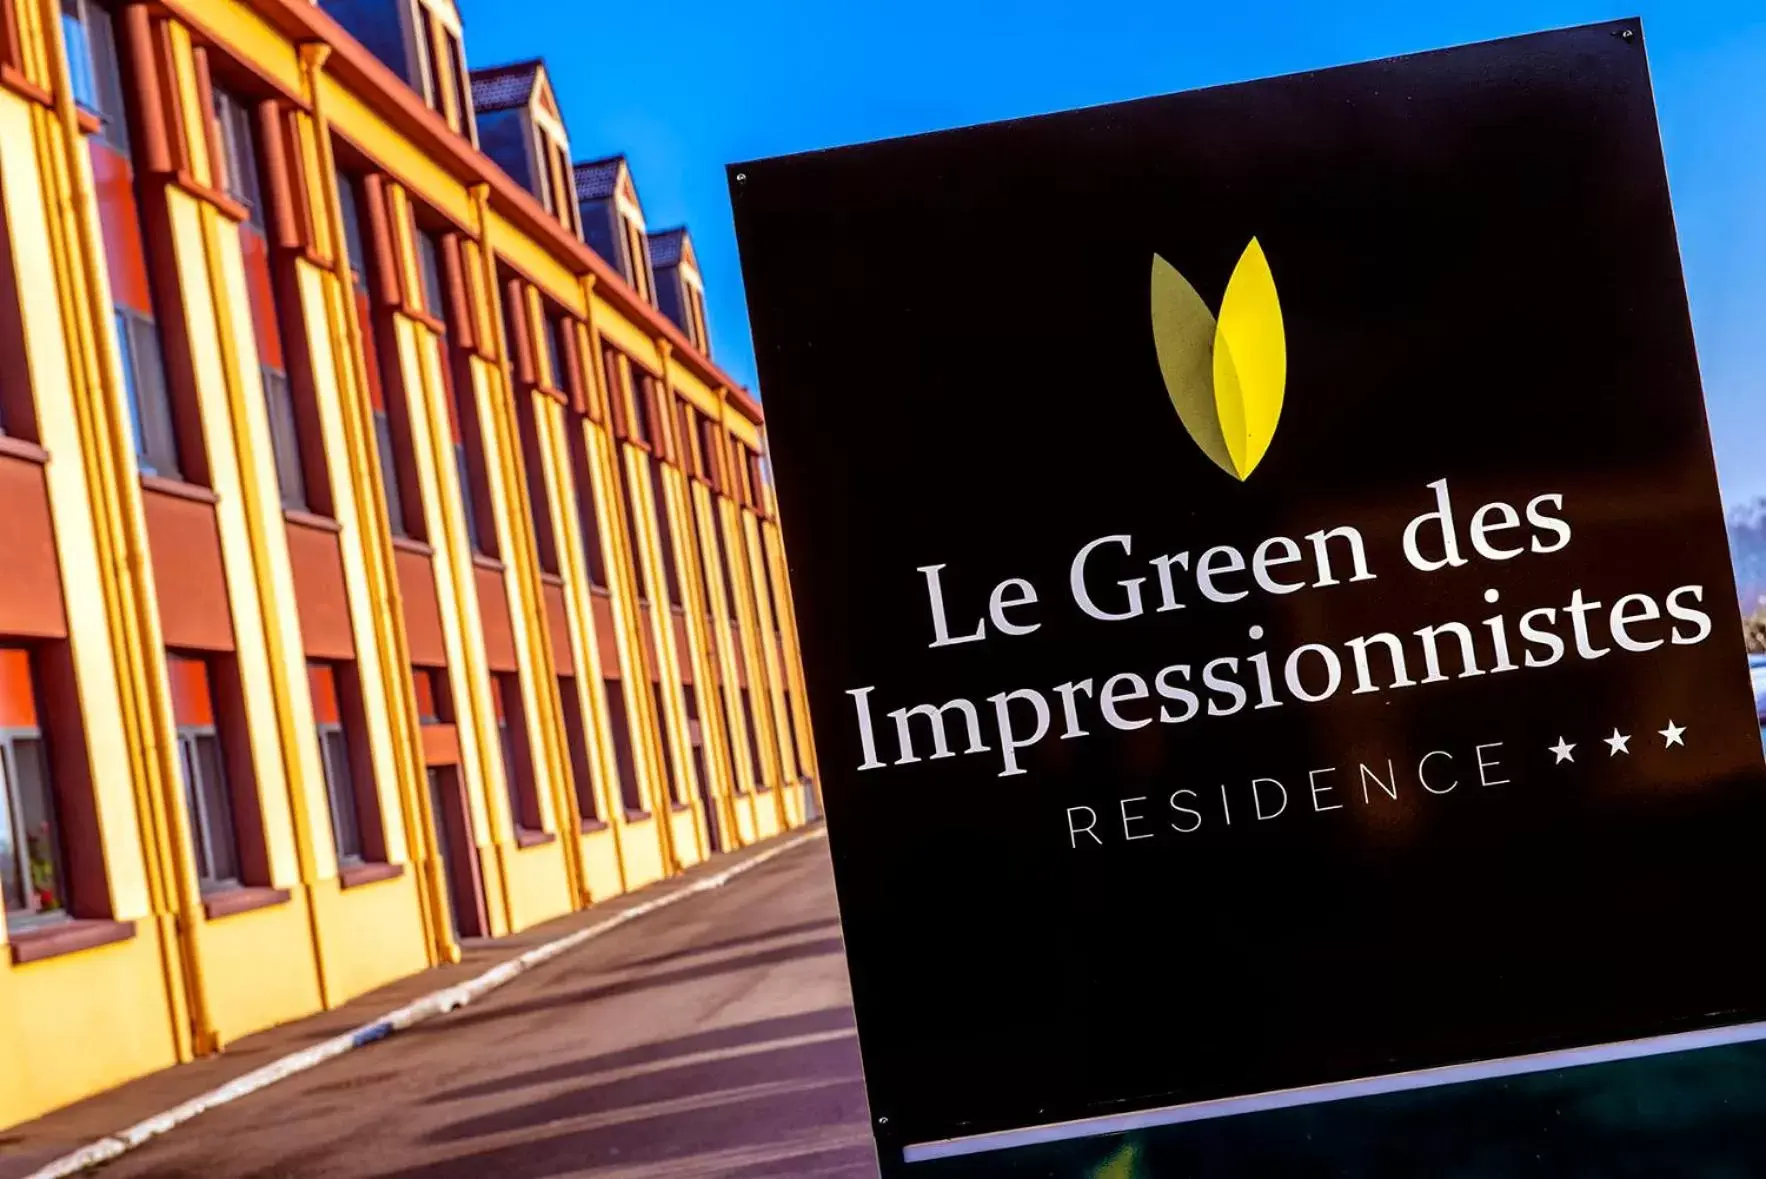 Facade/entrance in Le Green des Impressionnistes